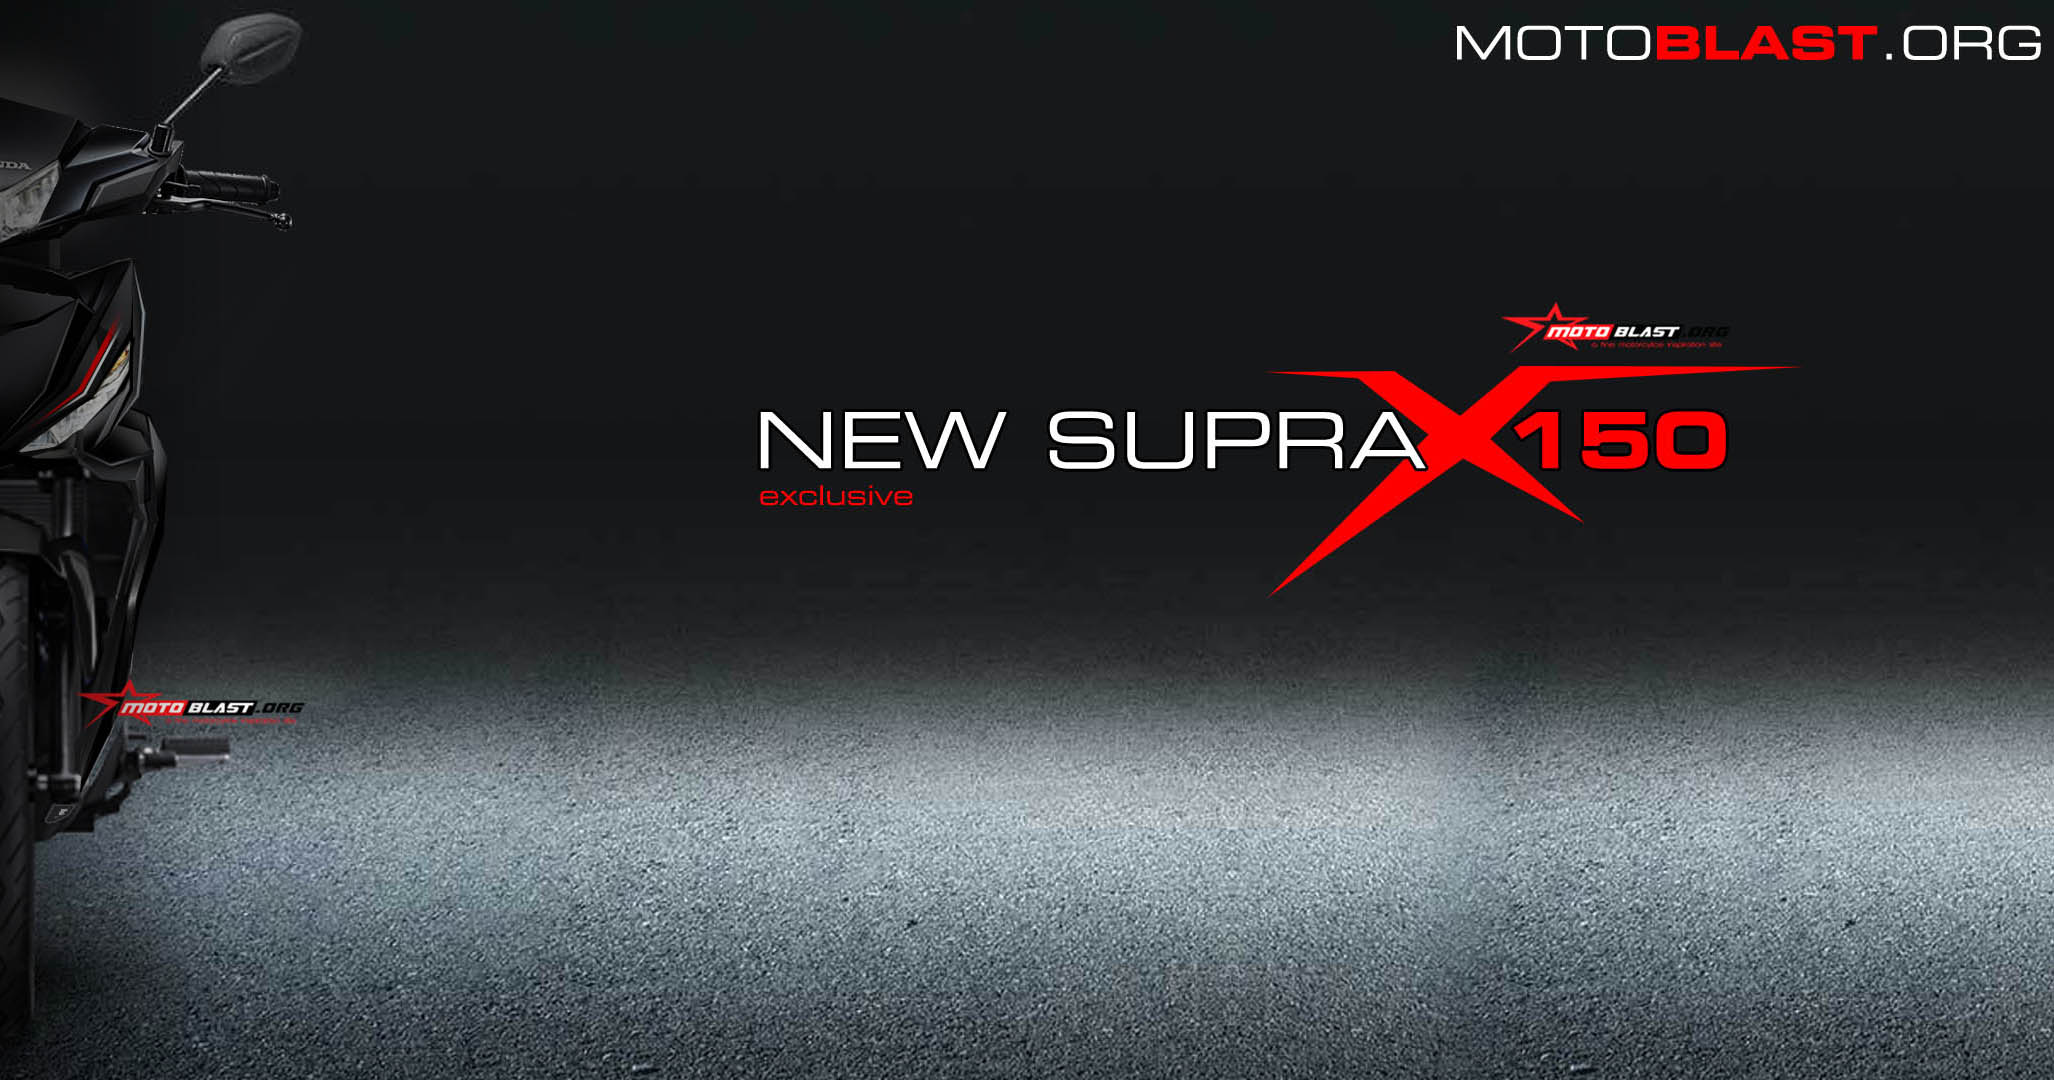 HOT Rendering Honda Supra X 150 Front View MOTOBLAST